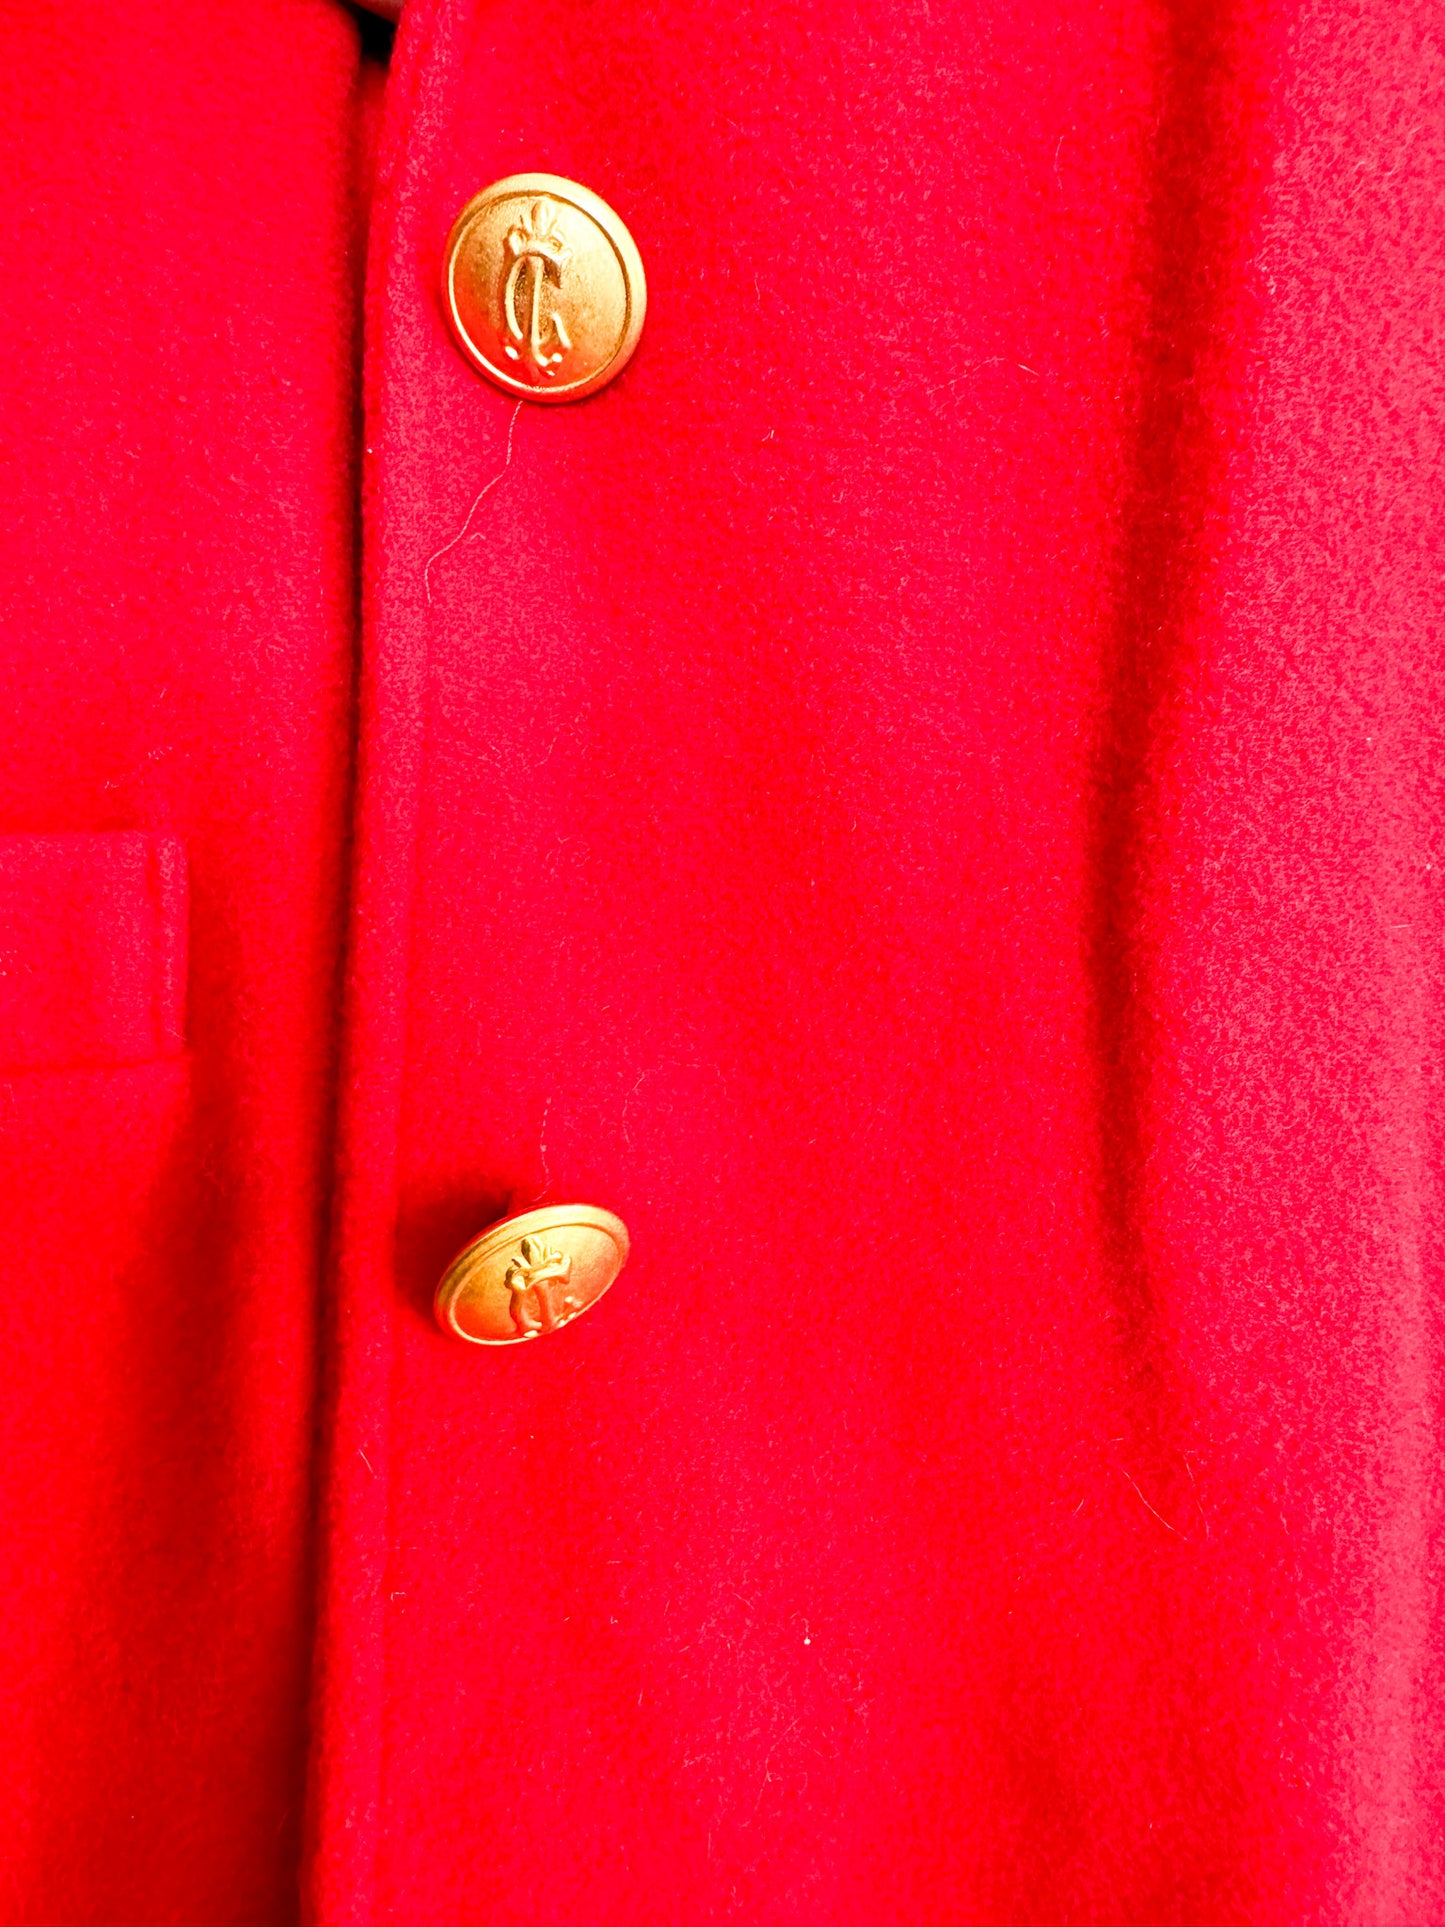 Chic-Pettites Wool and Cashmere Blazer with Gold Buttons | Vintage Red Wool Blazer | Size: 10 wool Blazer | Fall/Winter Blazer